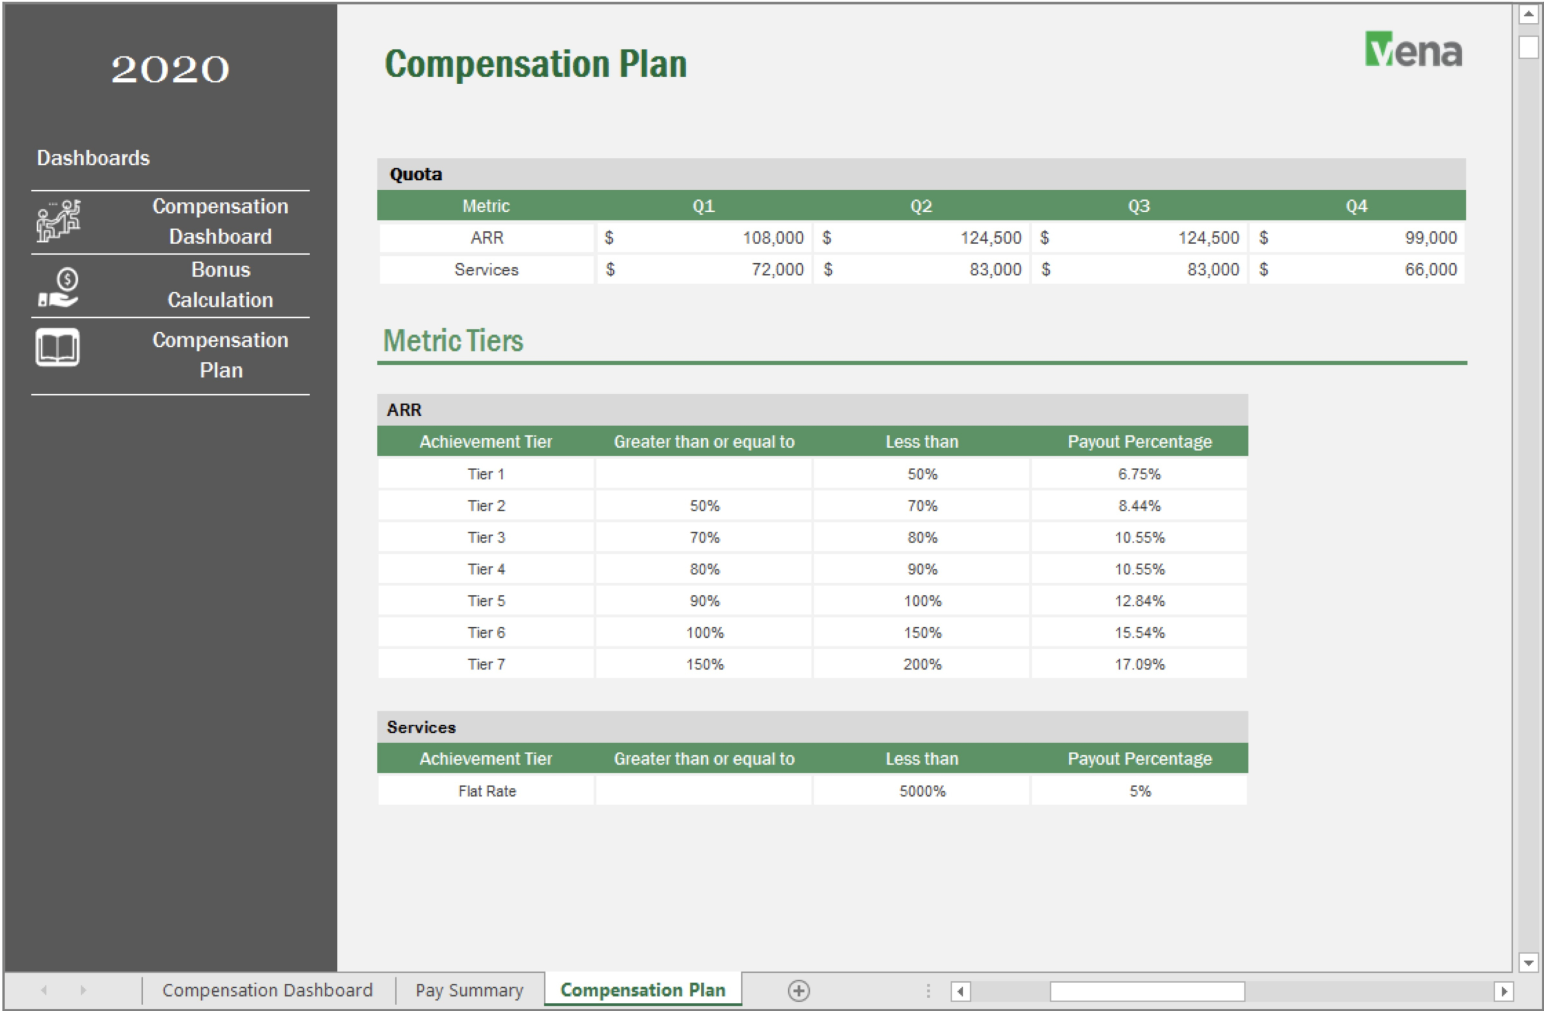 Screenshot of Vena's compensation plan template